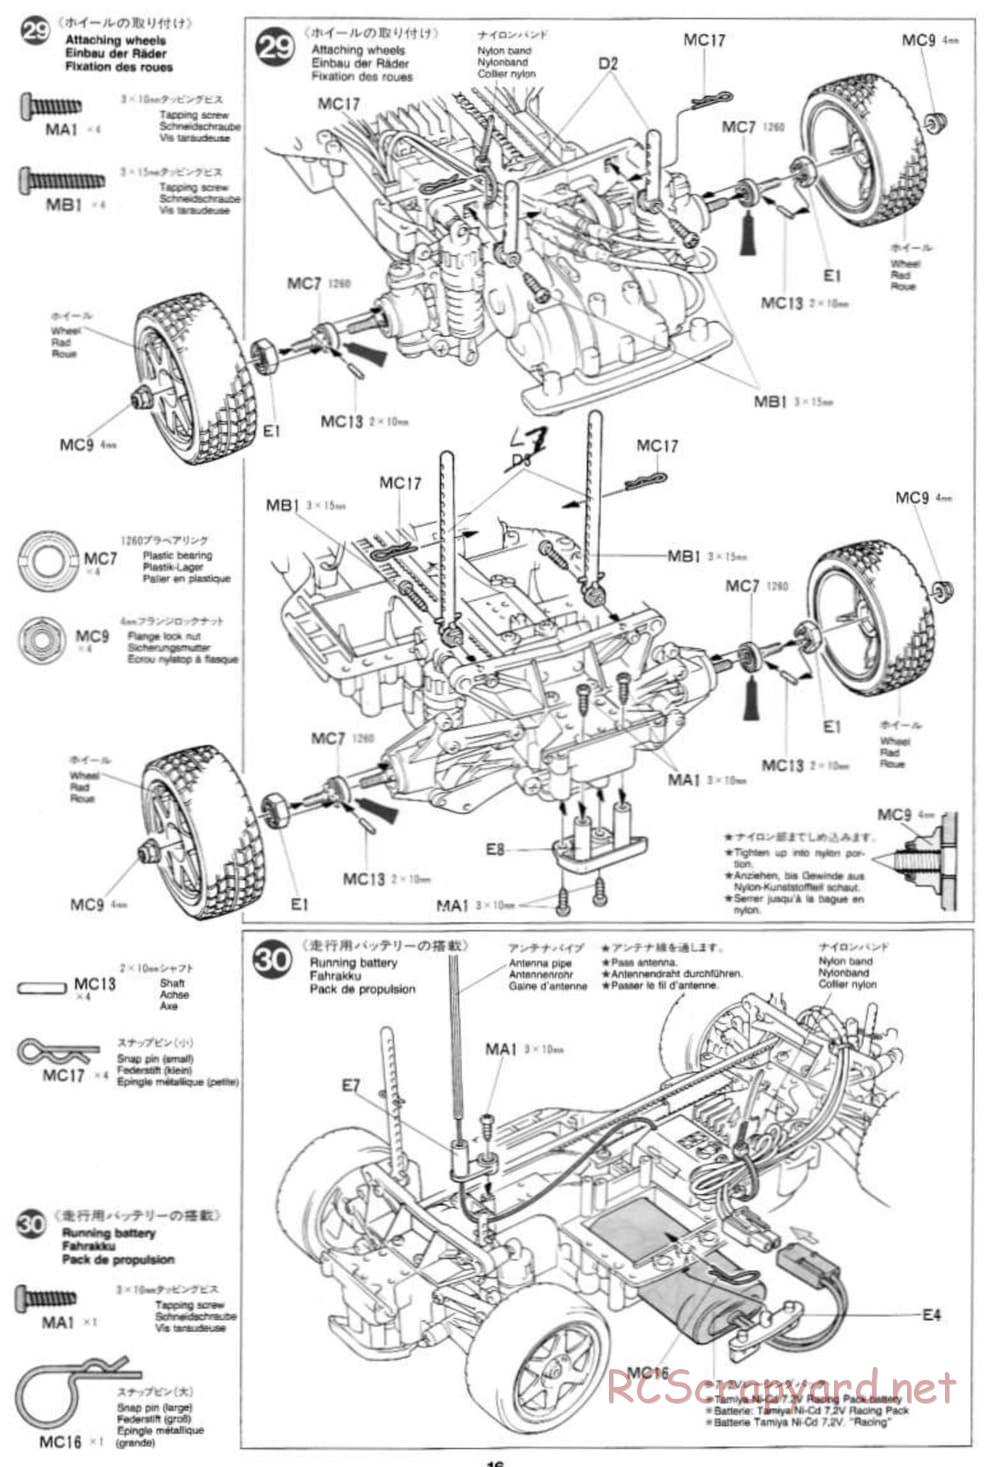 Tamiya - Subaru Impreza WRC 97 - TA-03F Chassis - Manual - Page 16